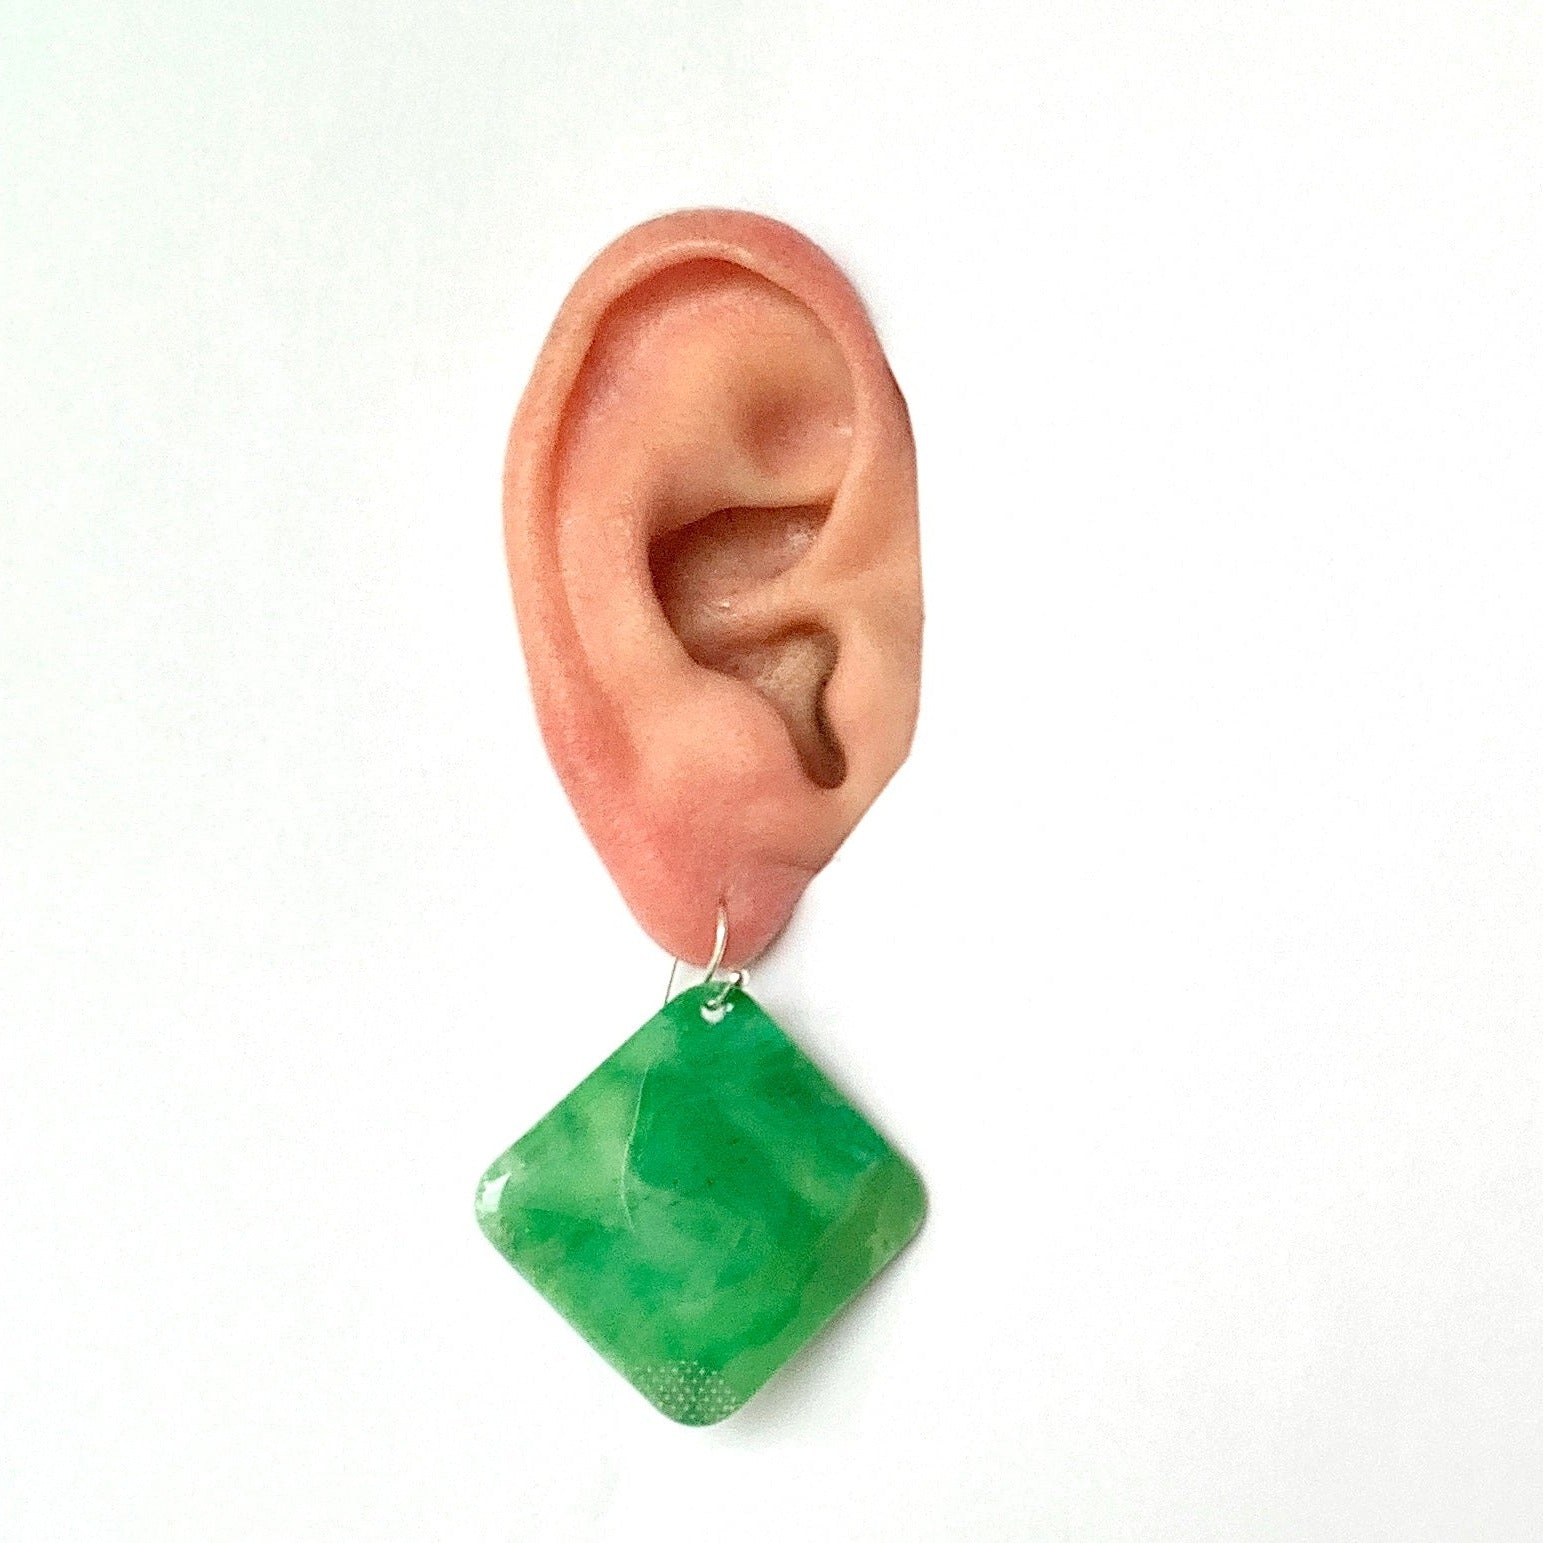 square diamond earrings dangling drop earrings handmade from recycled plastic sliver light green artesian eco friendly crocuses